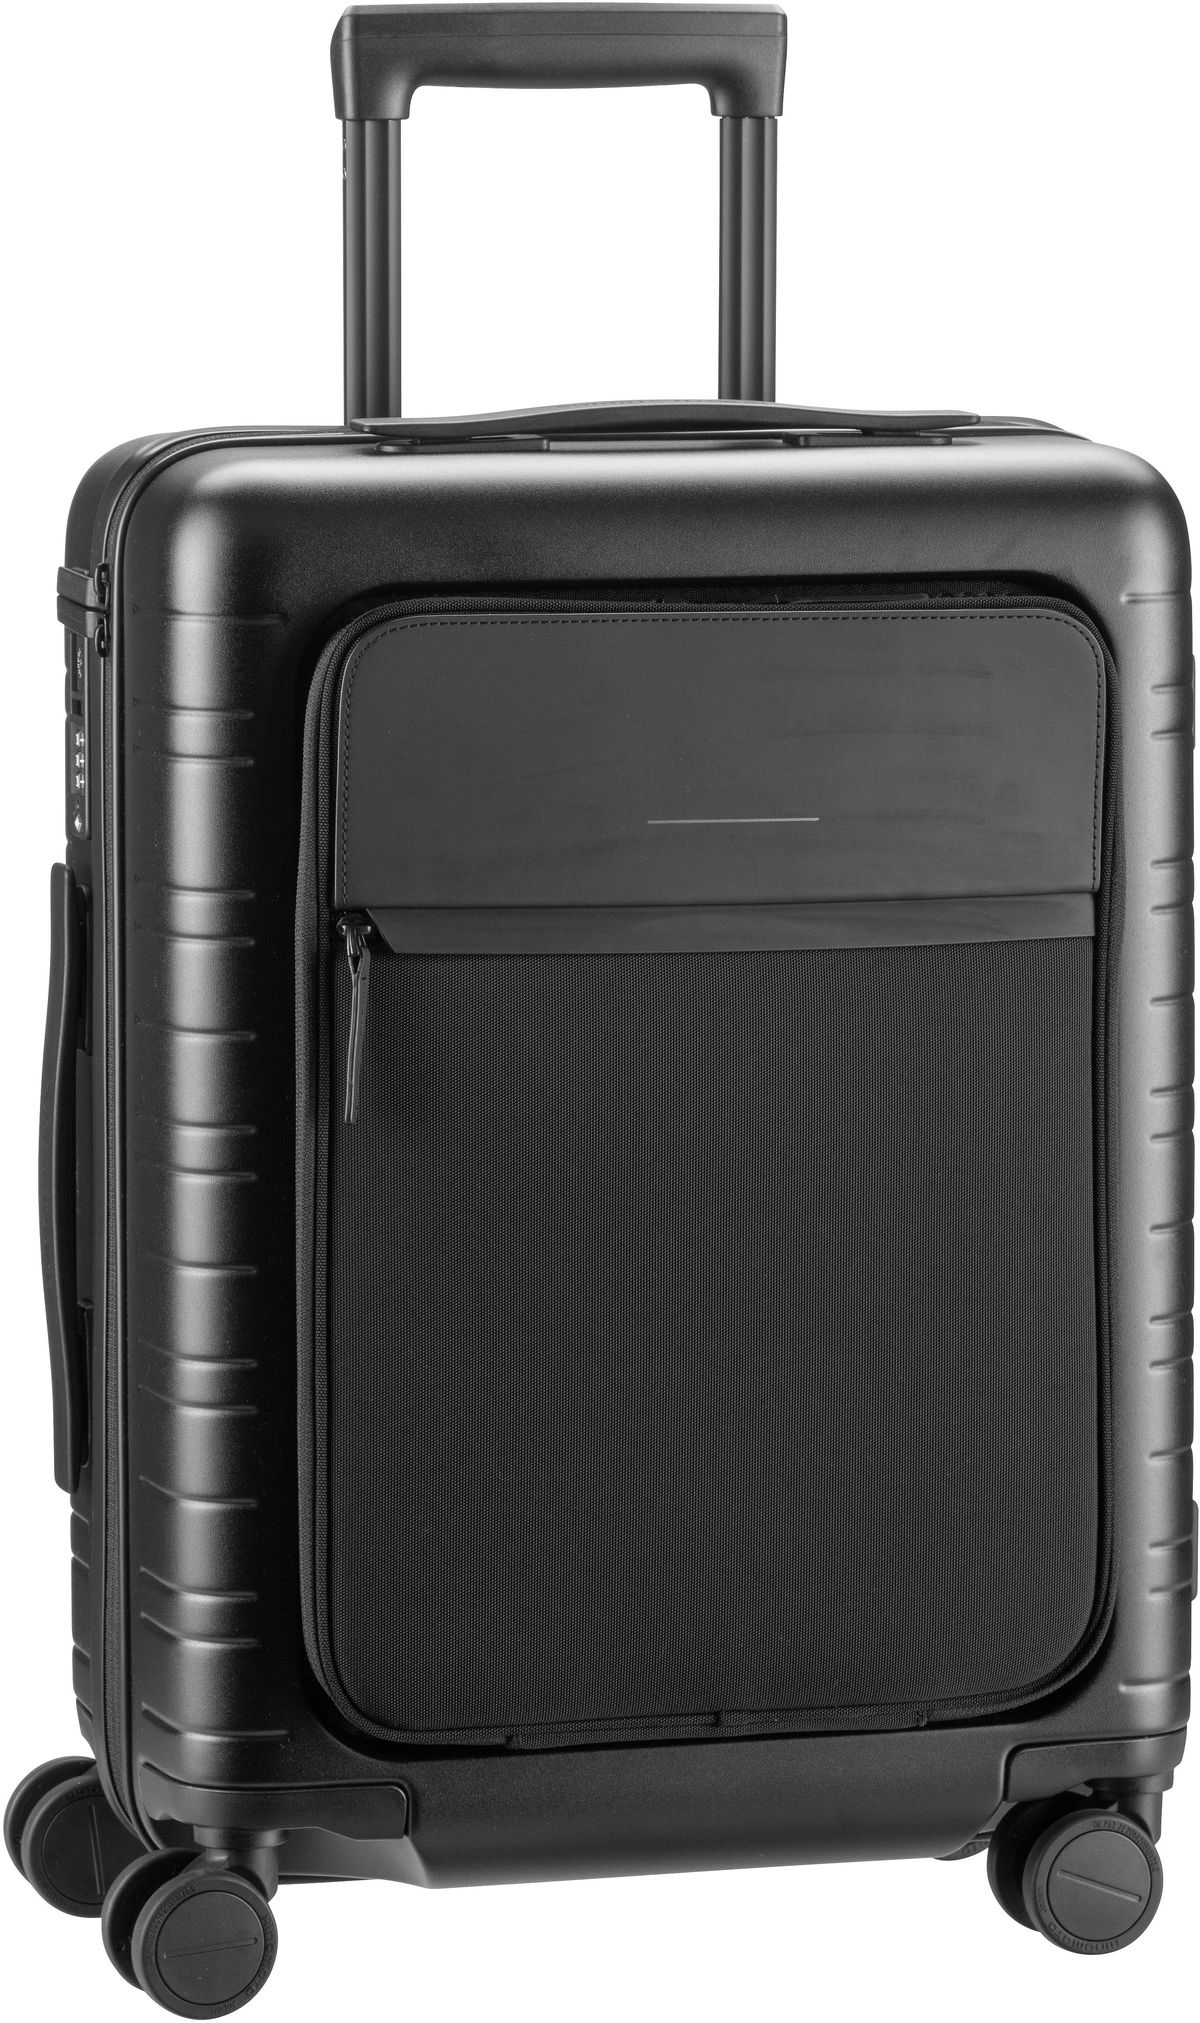 Horizn Studios M5 Smart Cabin Luggage  in All Black (33 Liter), Koffer & Trolley